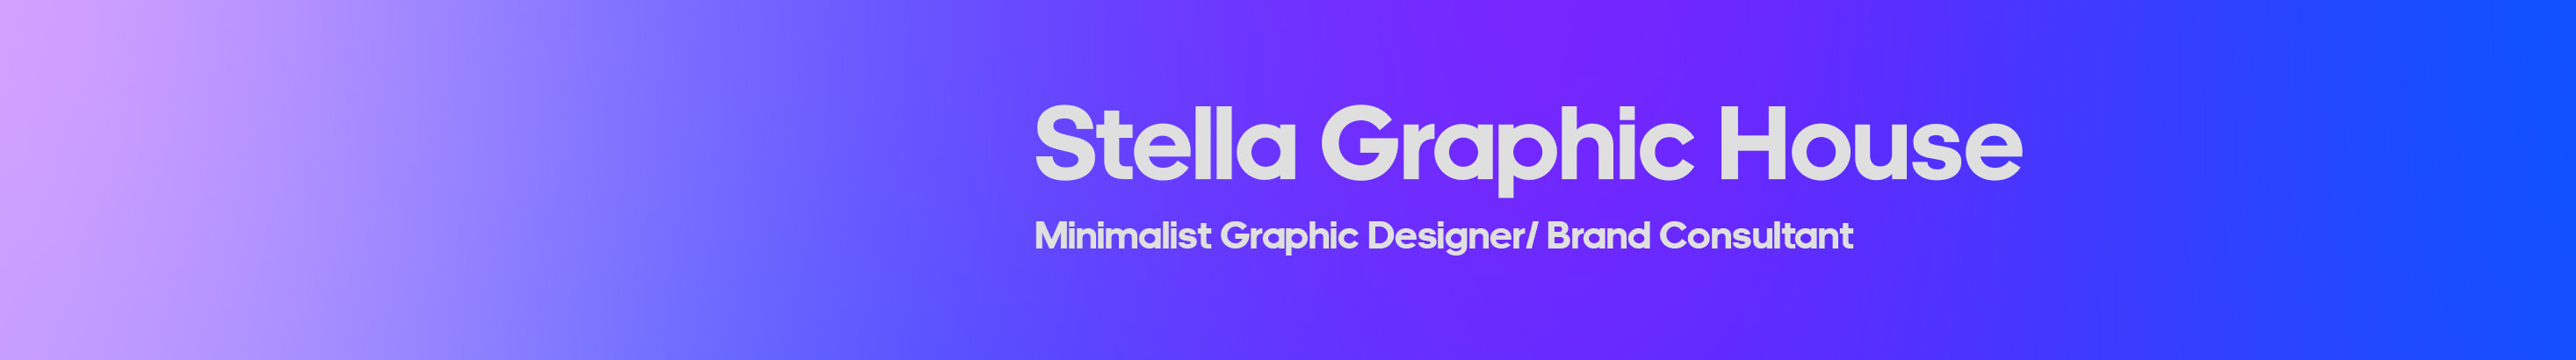 Stella Graphic House's profile banner